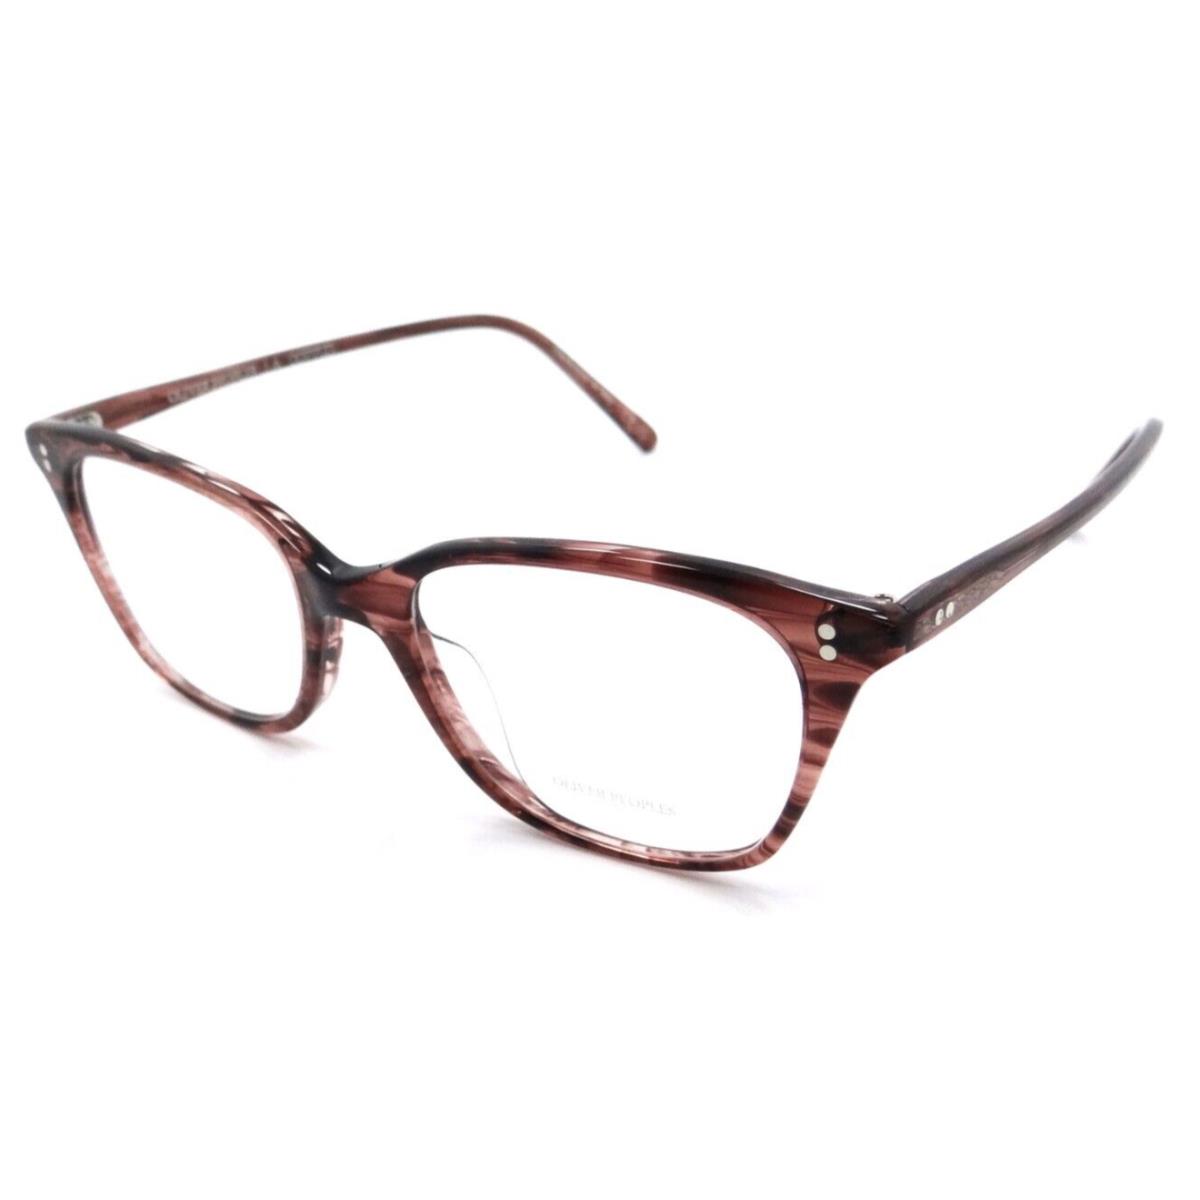 Oliver Peoples Eyeglasses Frames OV 5438U 1690 49-17-145 Addilyn Merlot Smoke